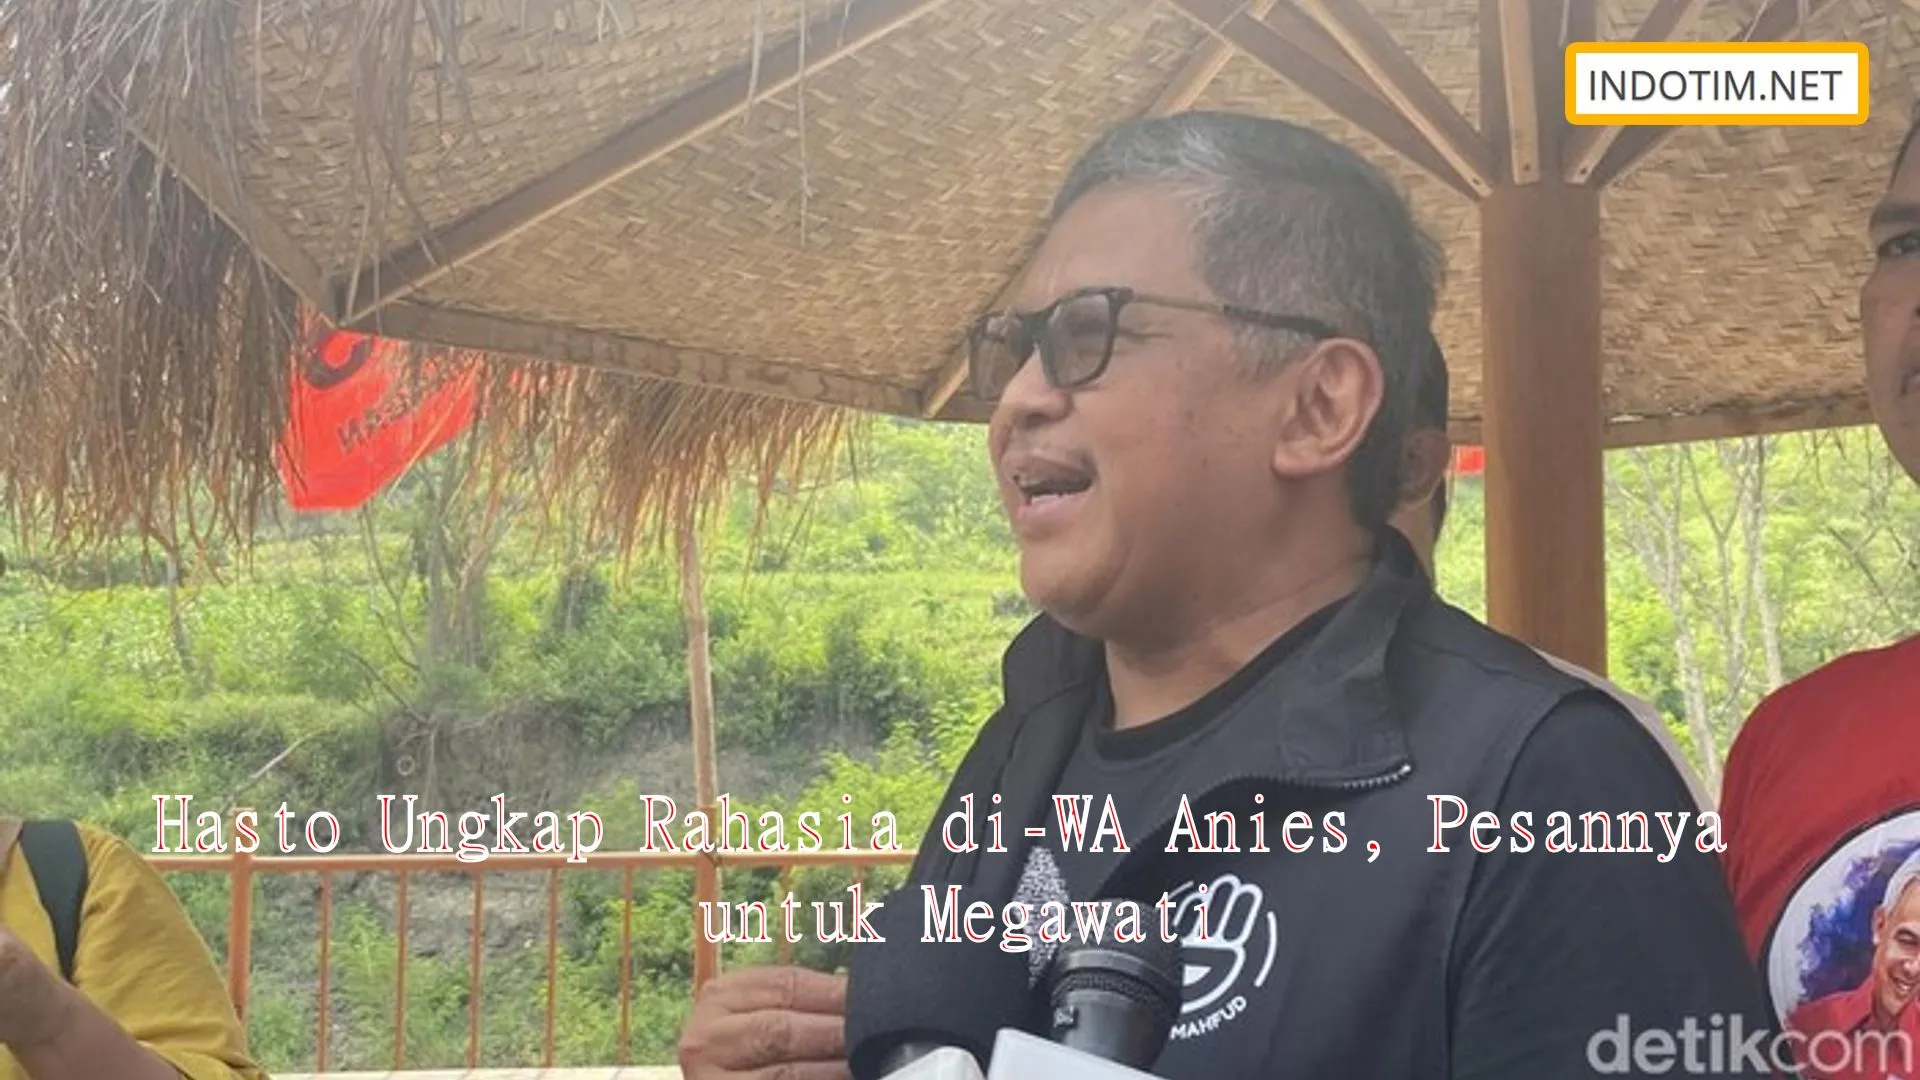 Hasto Ungkap Rahasia di-WA Anies, Pesannya untuk Megawati